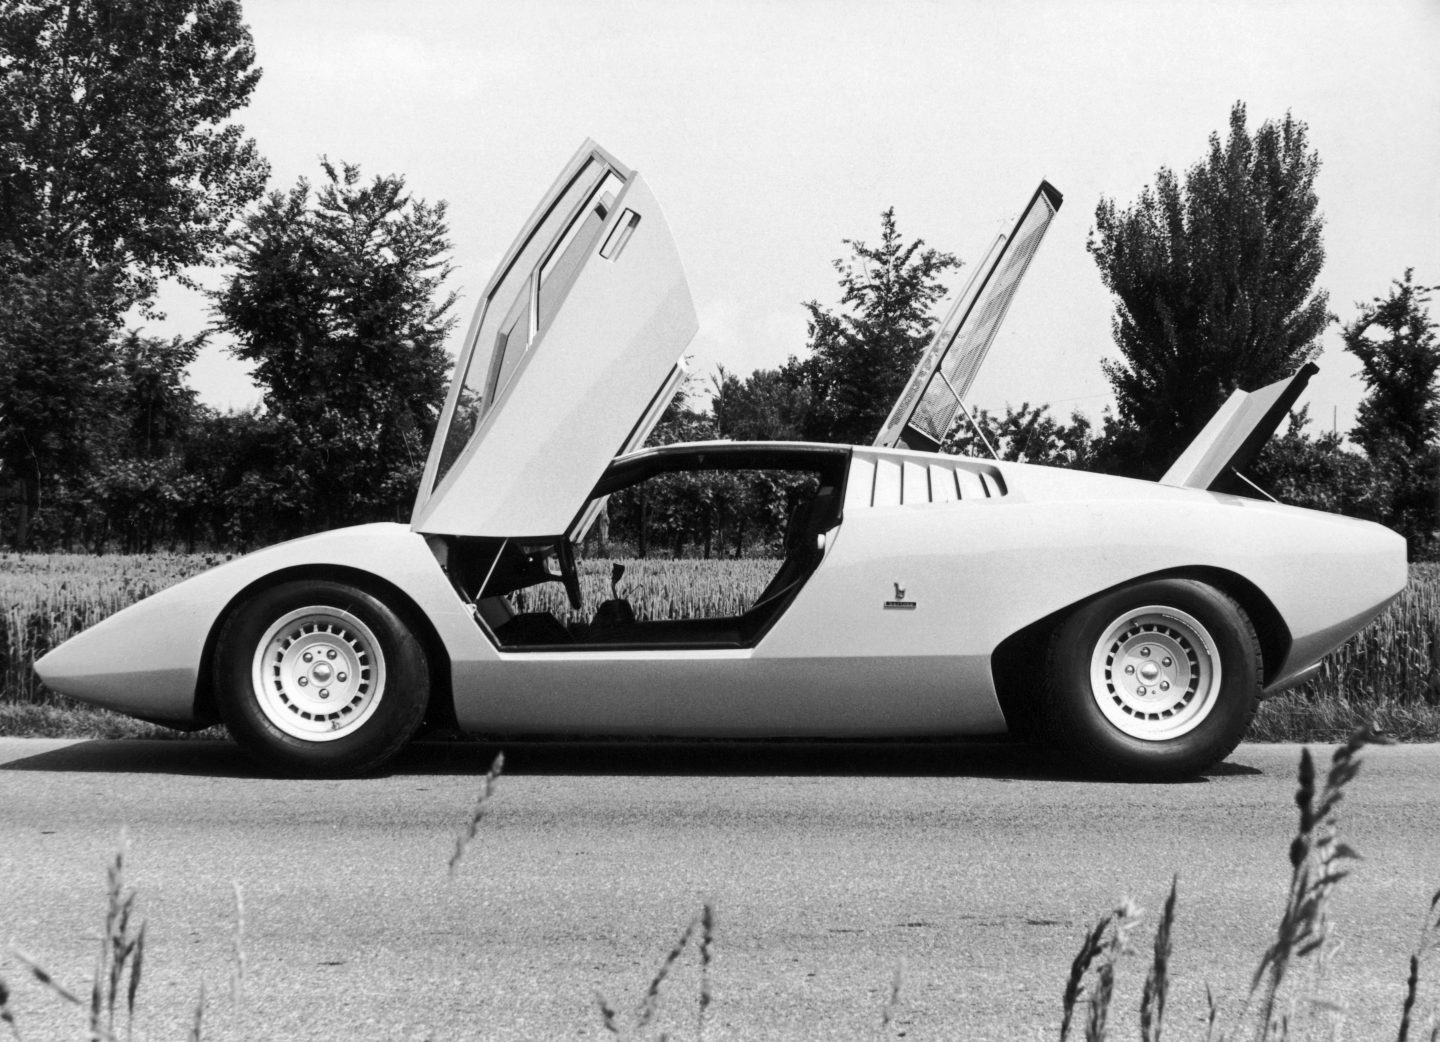 Remembering Marcello Gandini, designer of the world’s most famous supercar